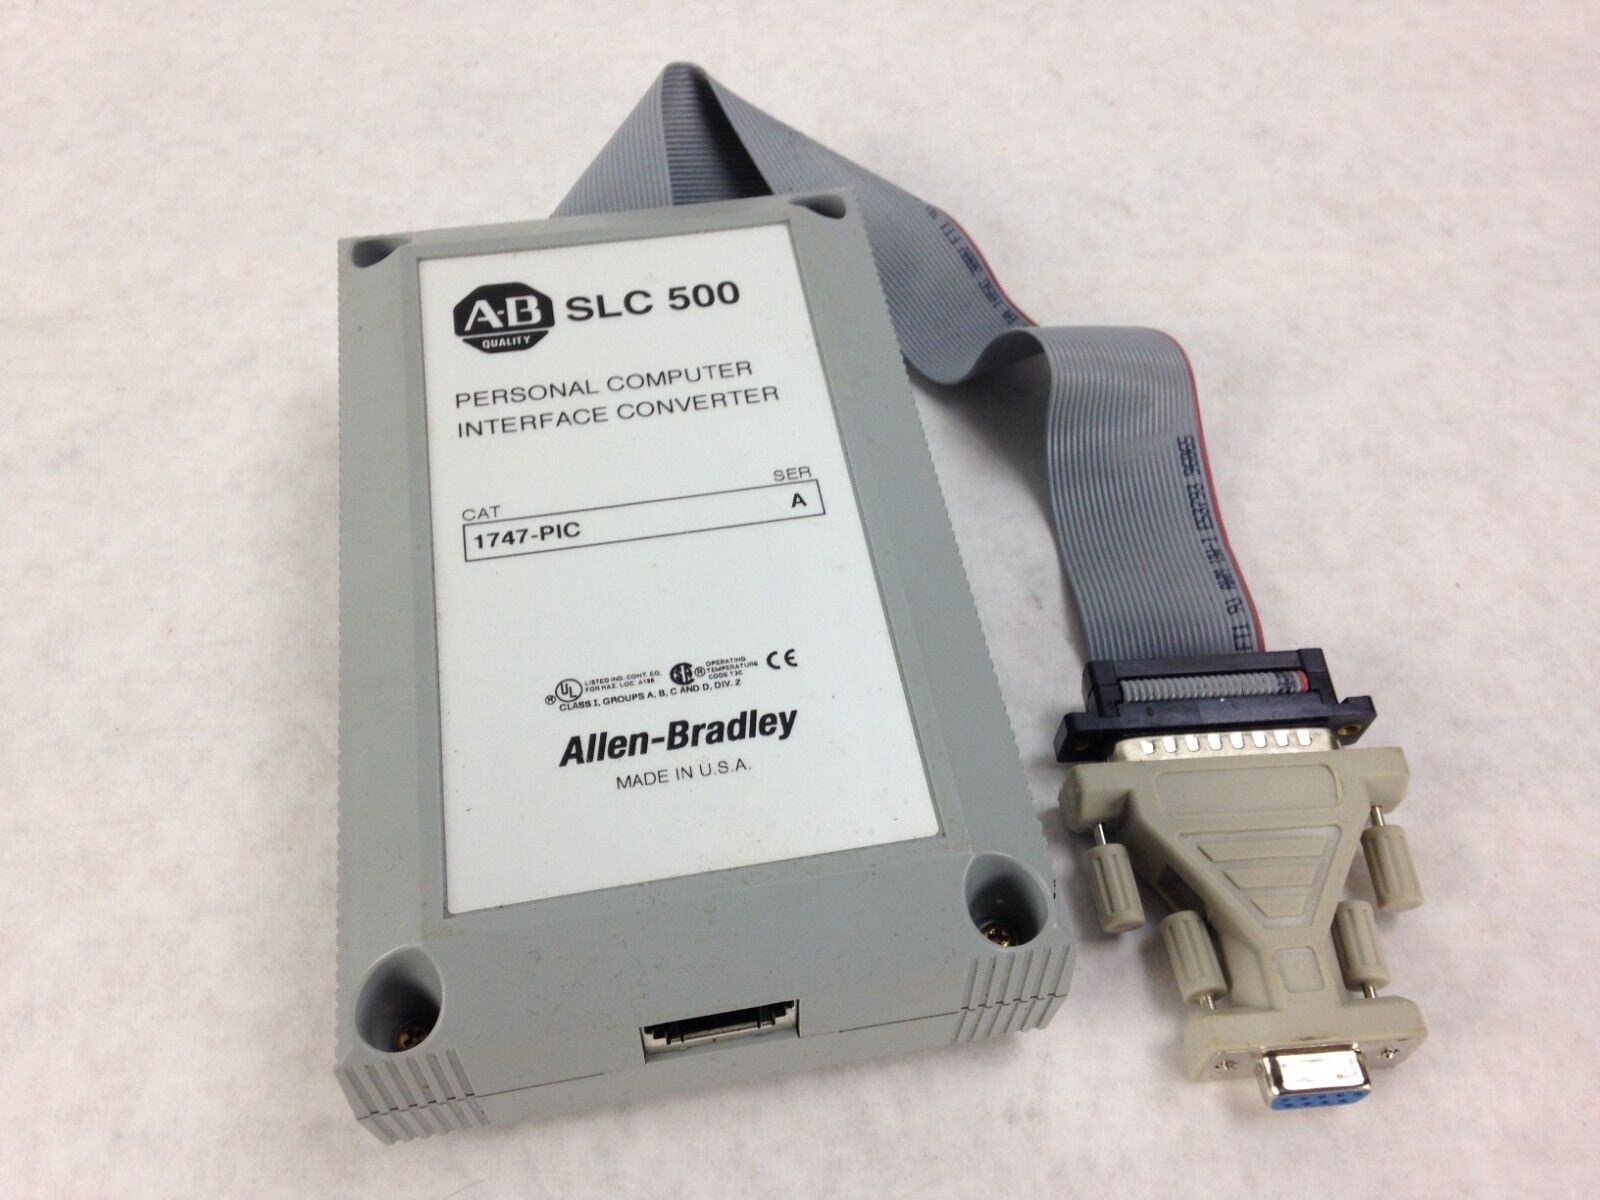 Allen-Bradley SLC-500 Personal Computer Interface Converter 1747-PIC Ser A